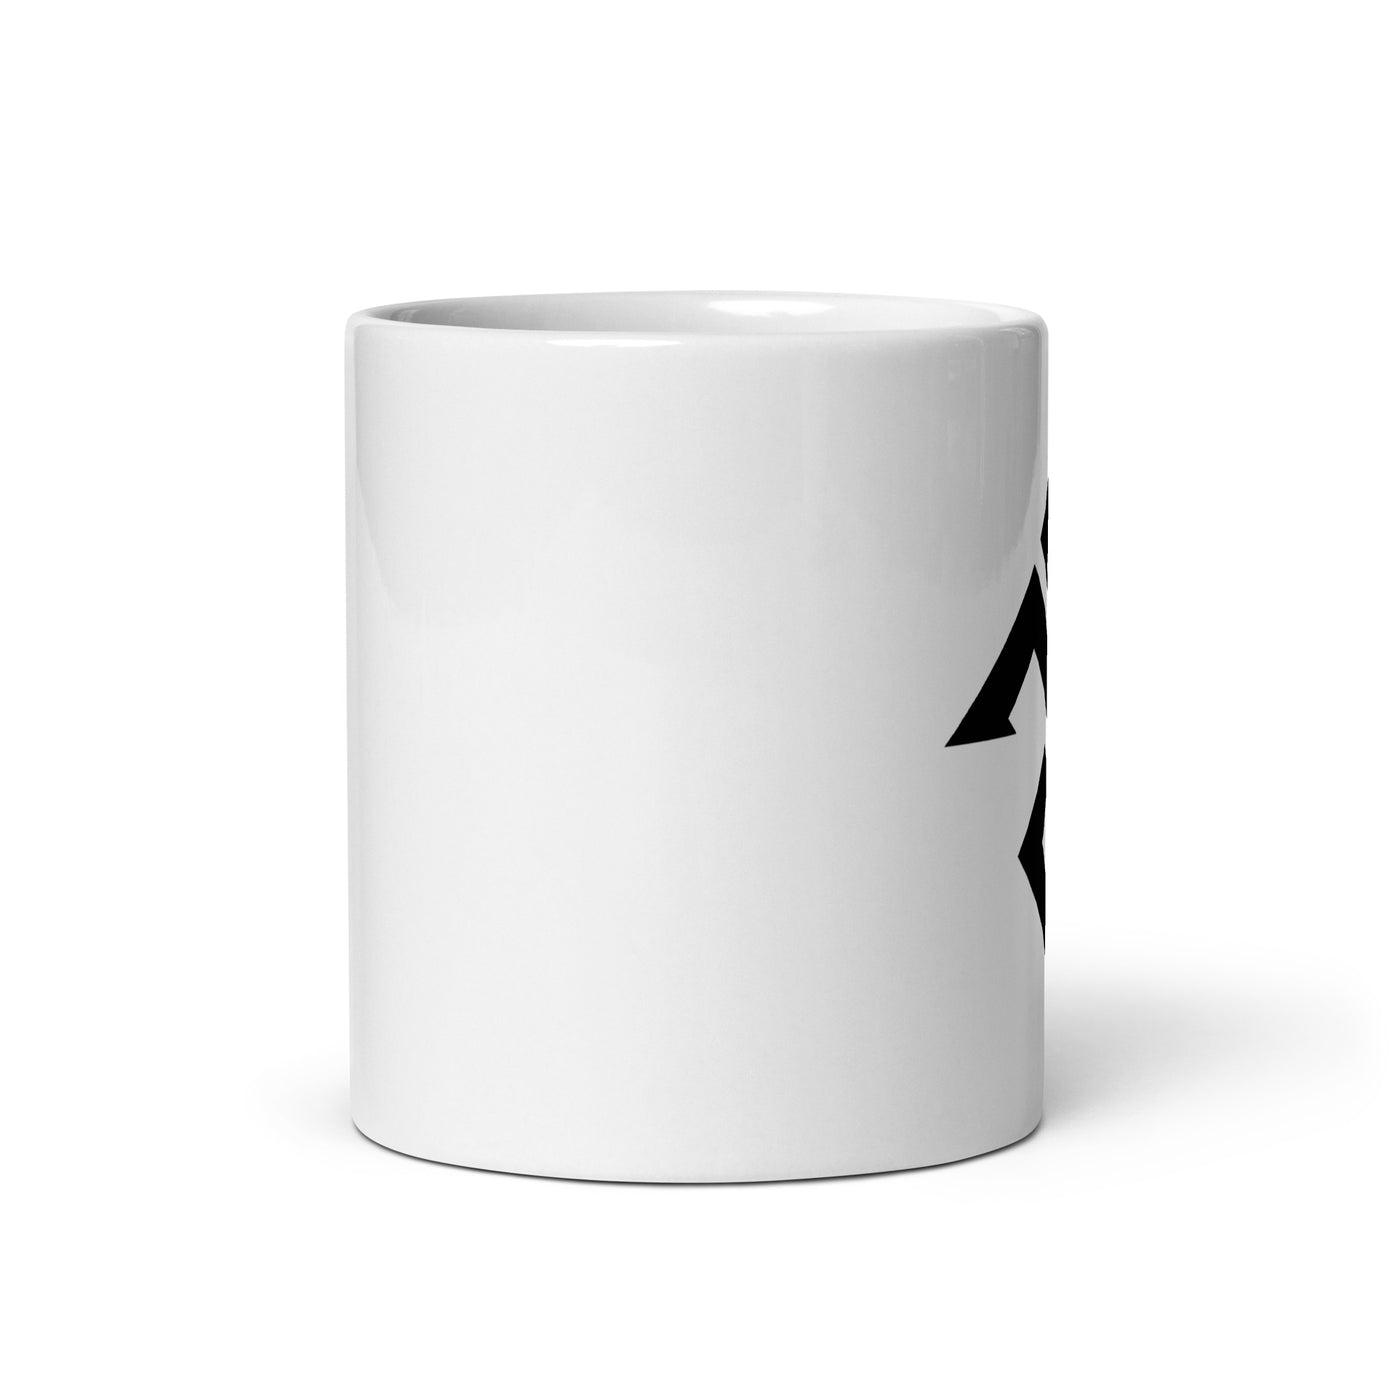 Team Summit White glossy mug